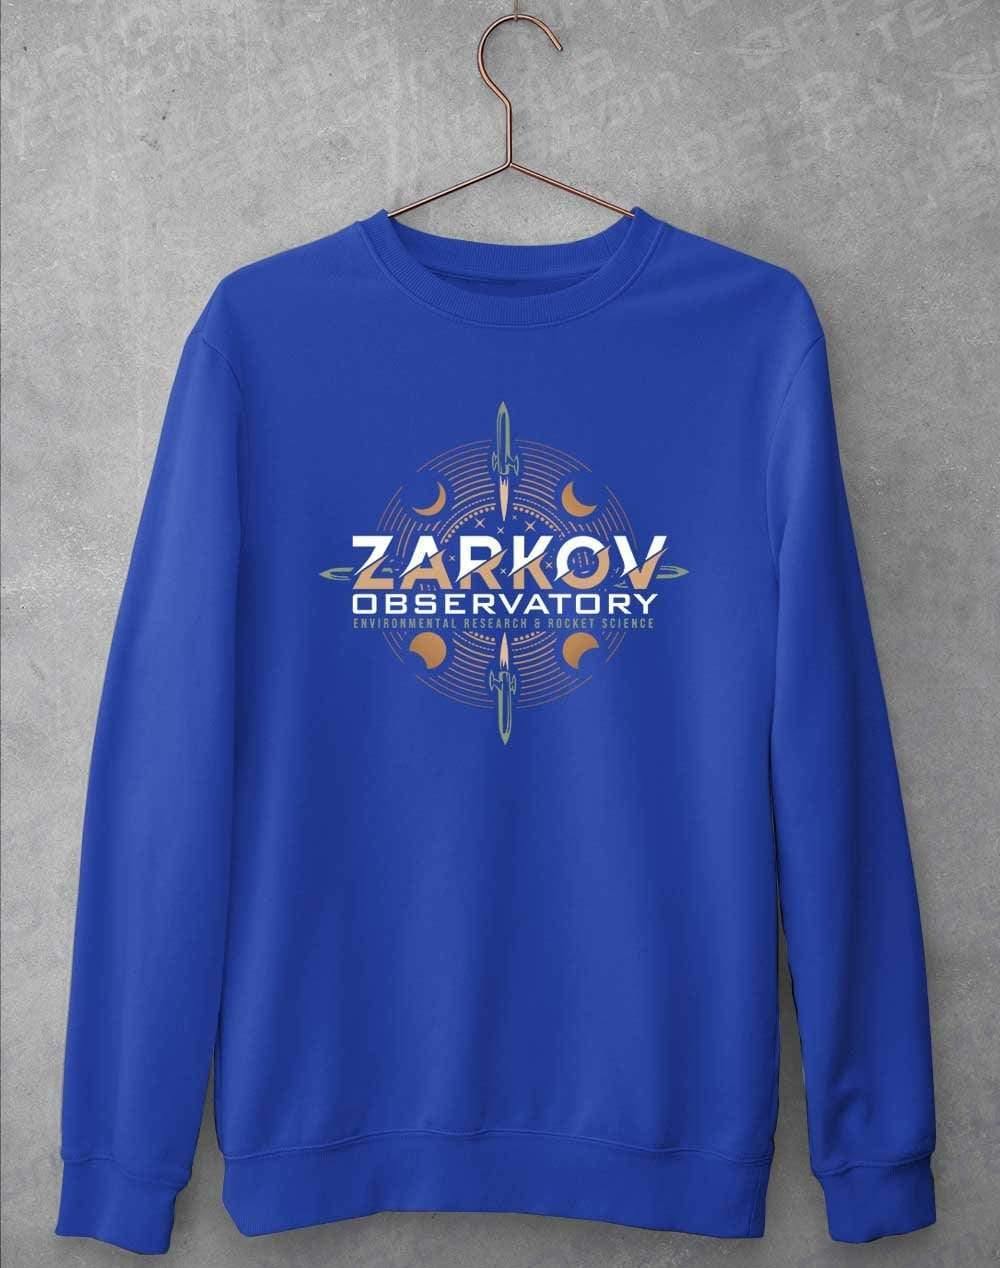 Zarkov Observatory Sweatshirt S / Royal Blue  - Off World Tees